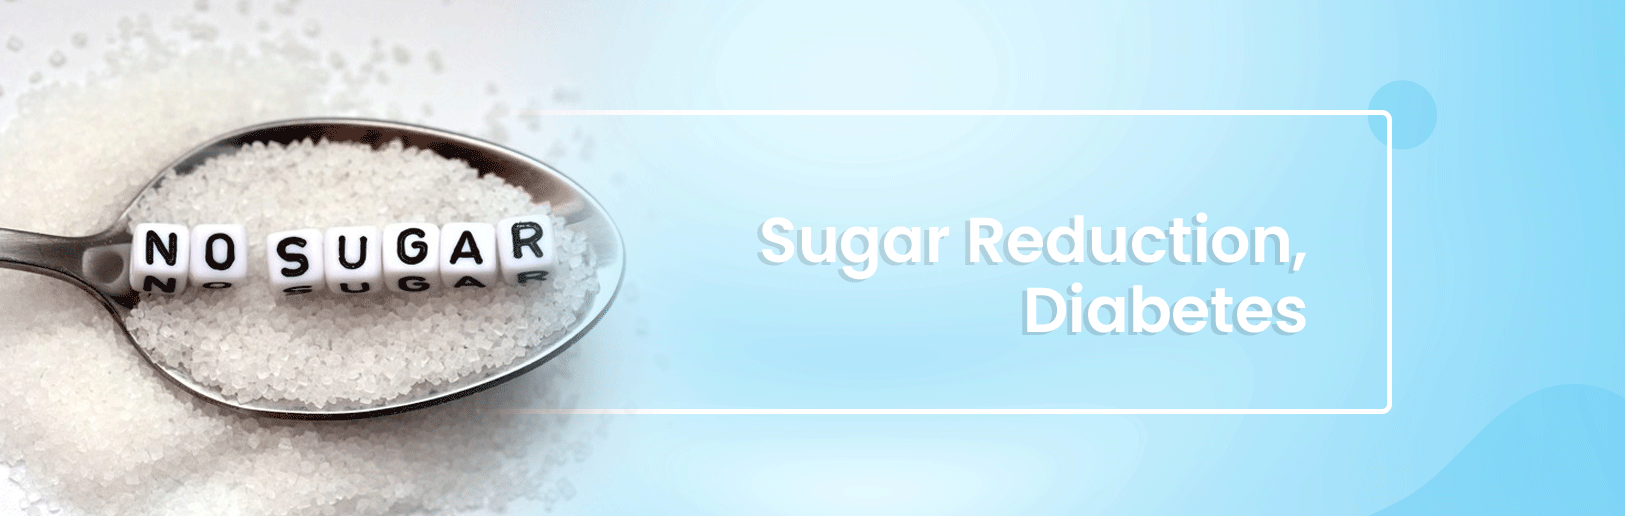 Sugar Reduction, Diabetes